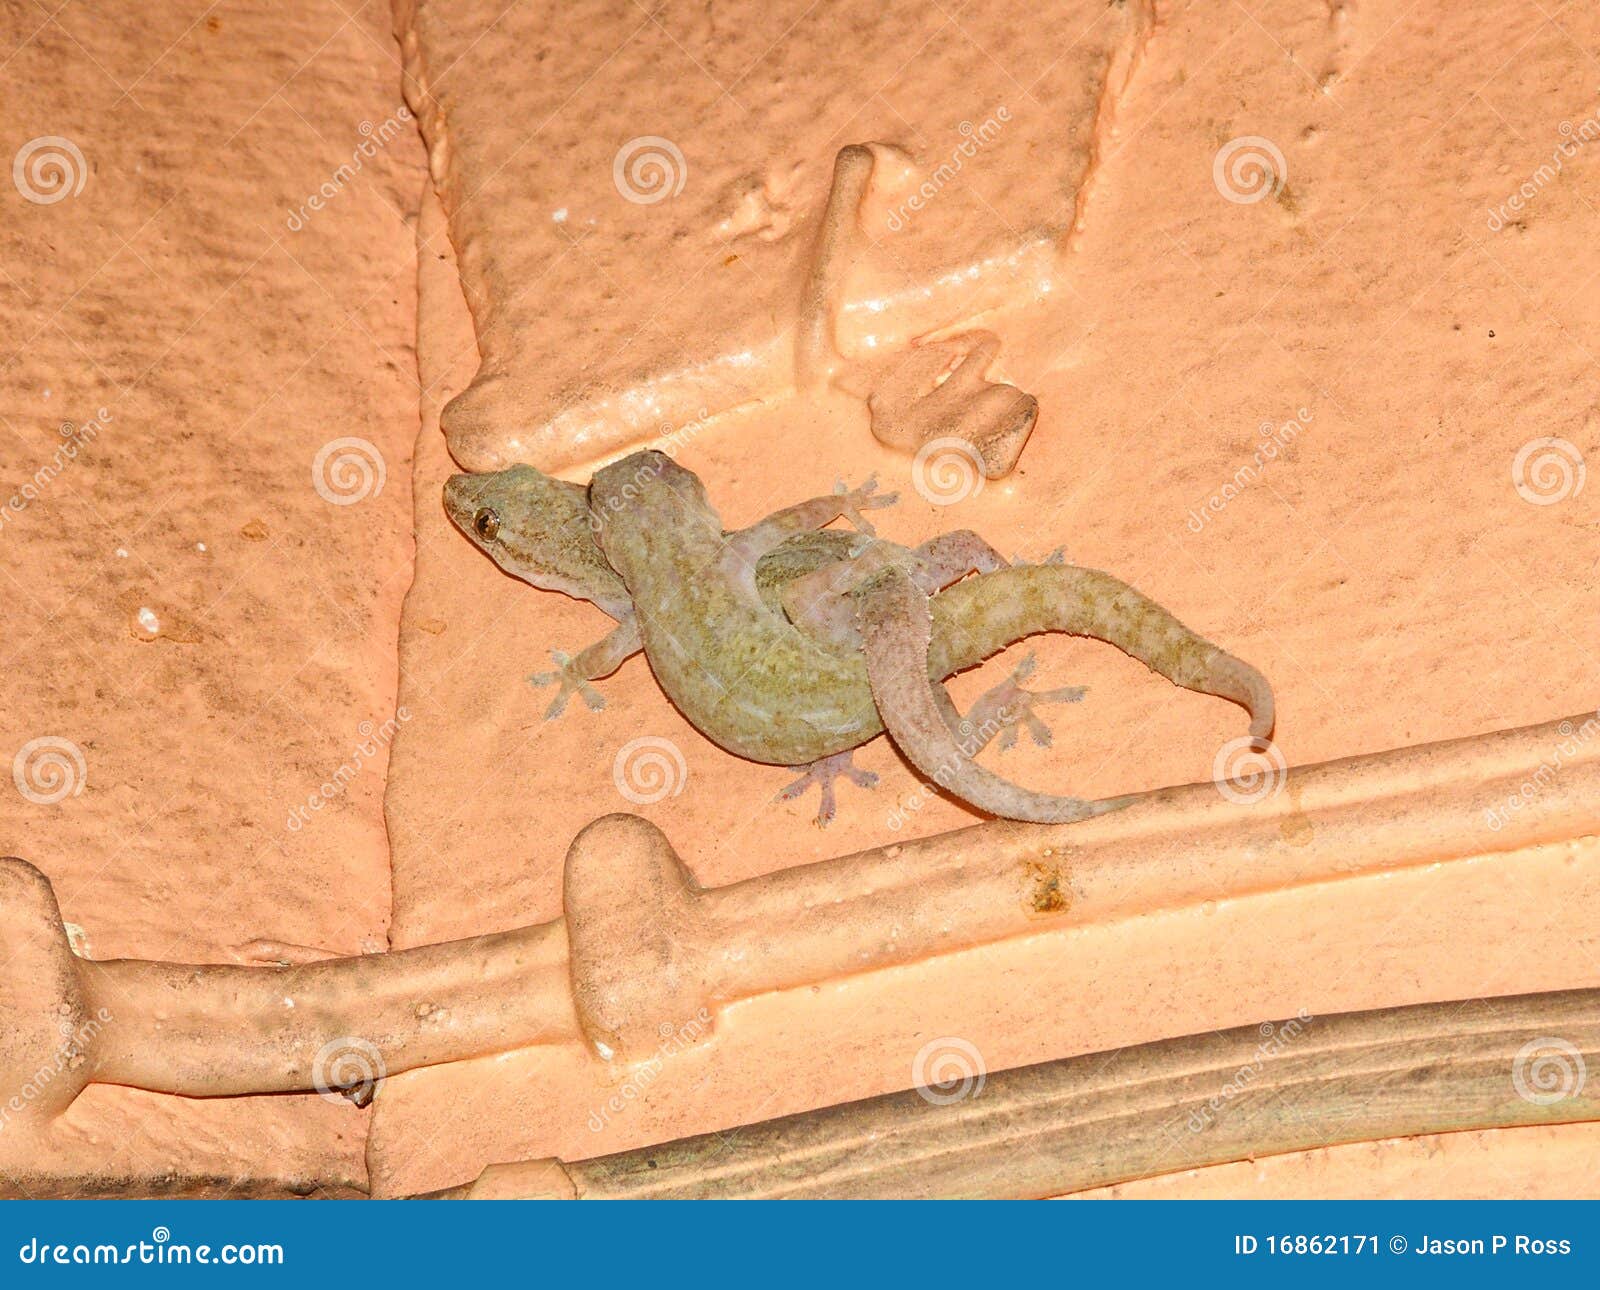 house geckos (hemidactylus frenatus)